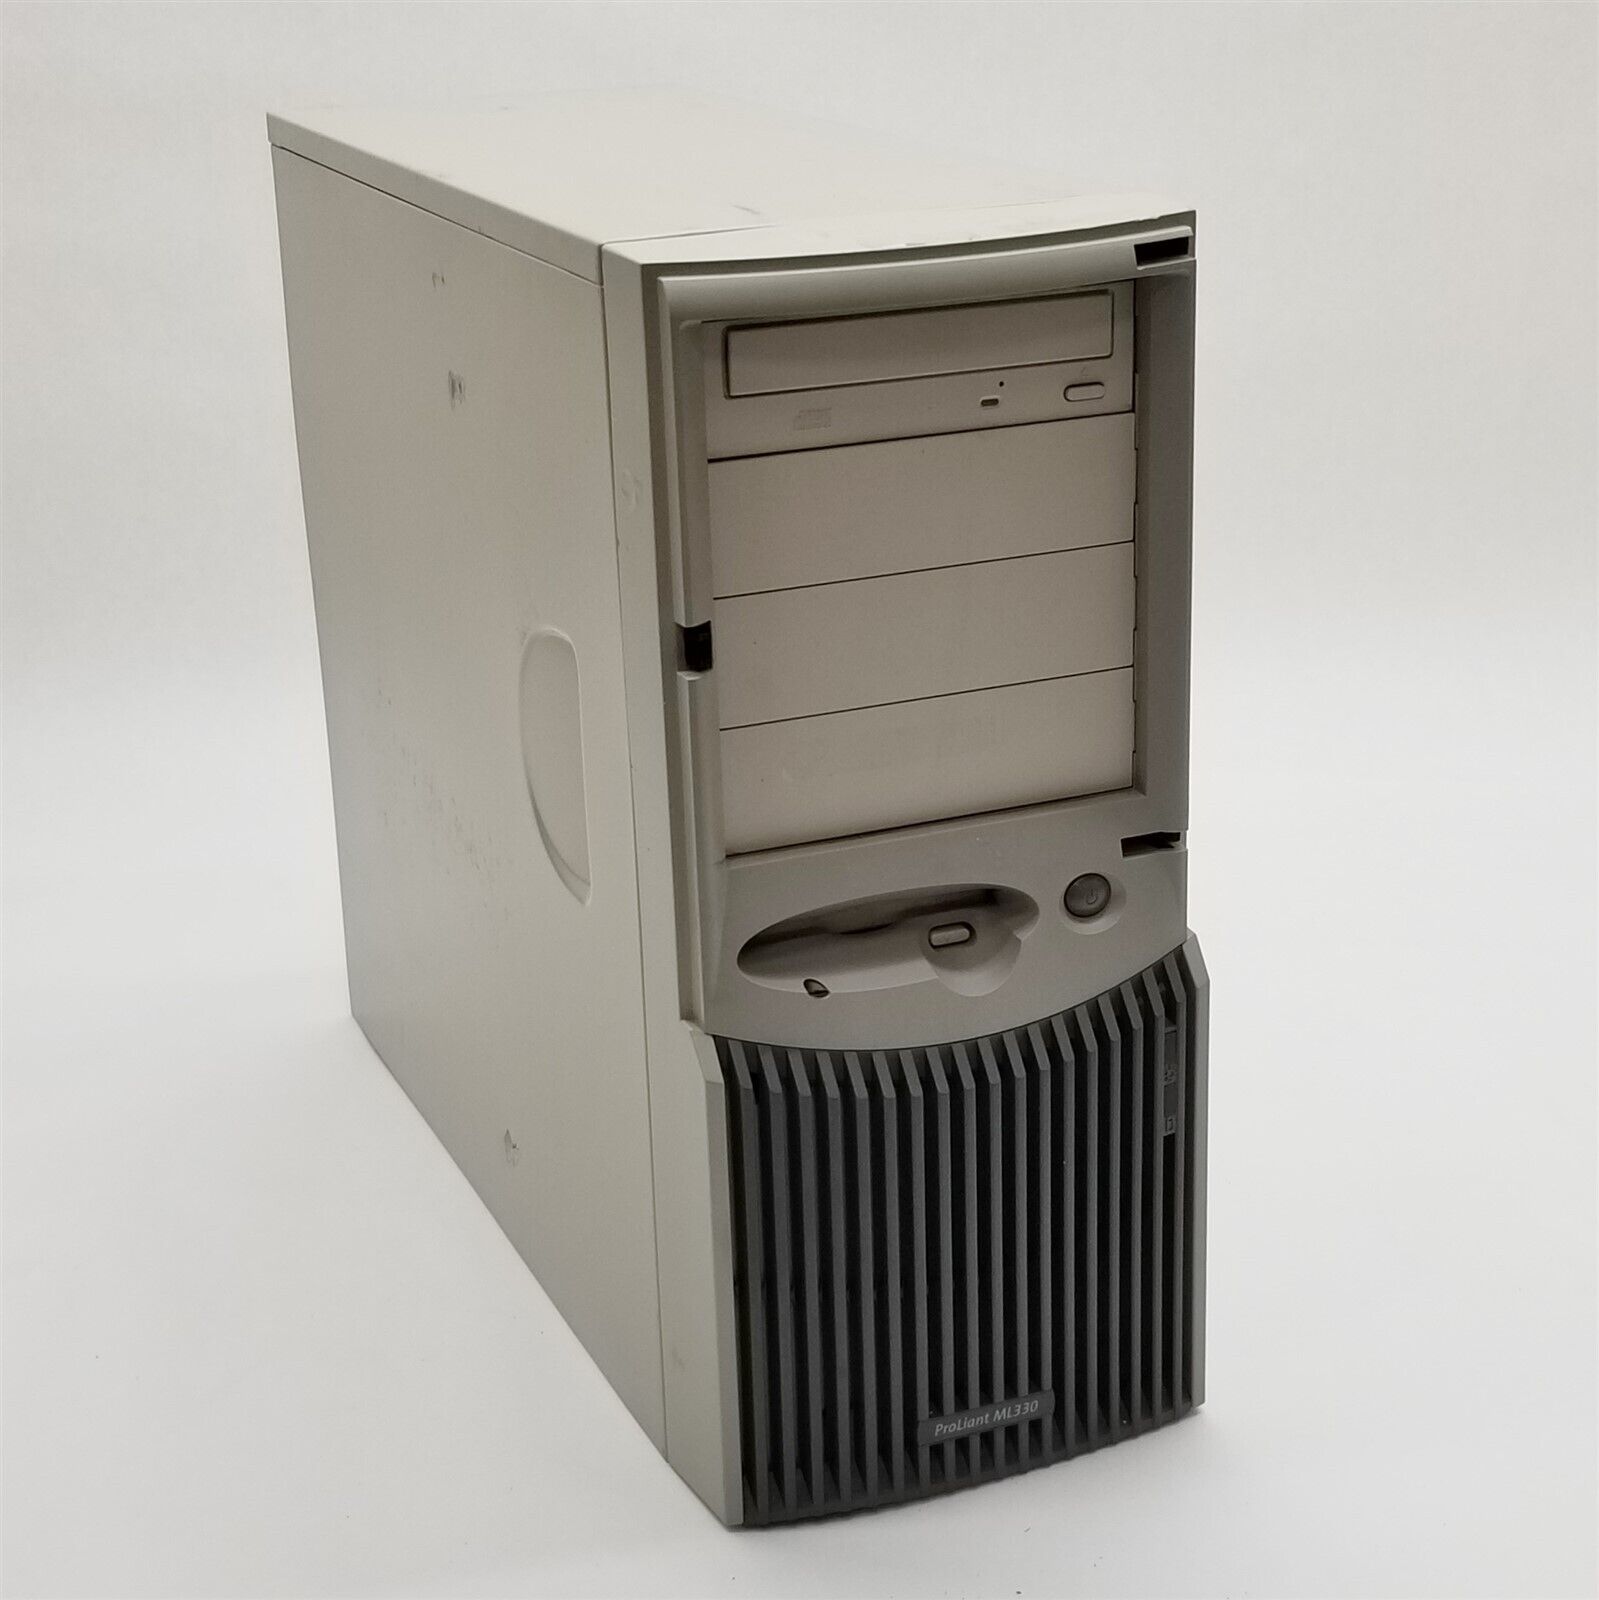 Compaq ProLiant ML330 Tower Pentium III 1.0GHz 512MB RAM *No HDD* Retro Server